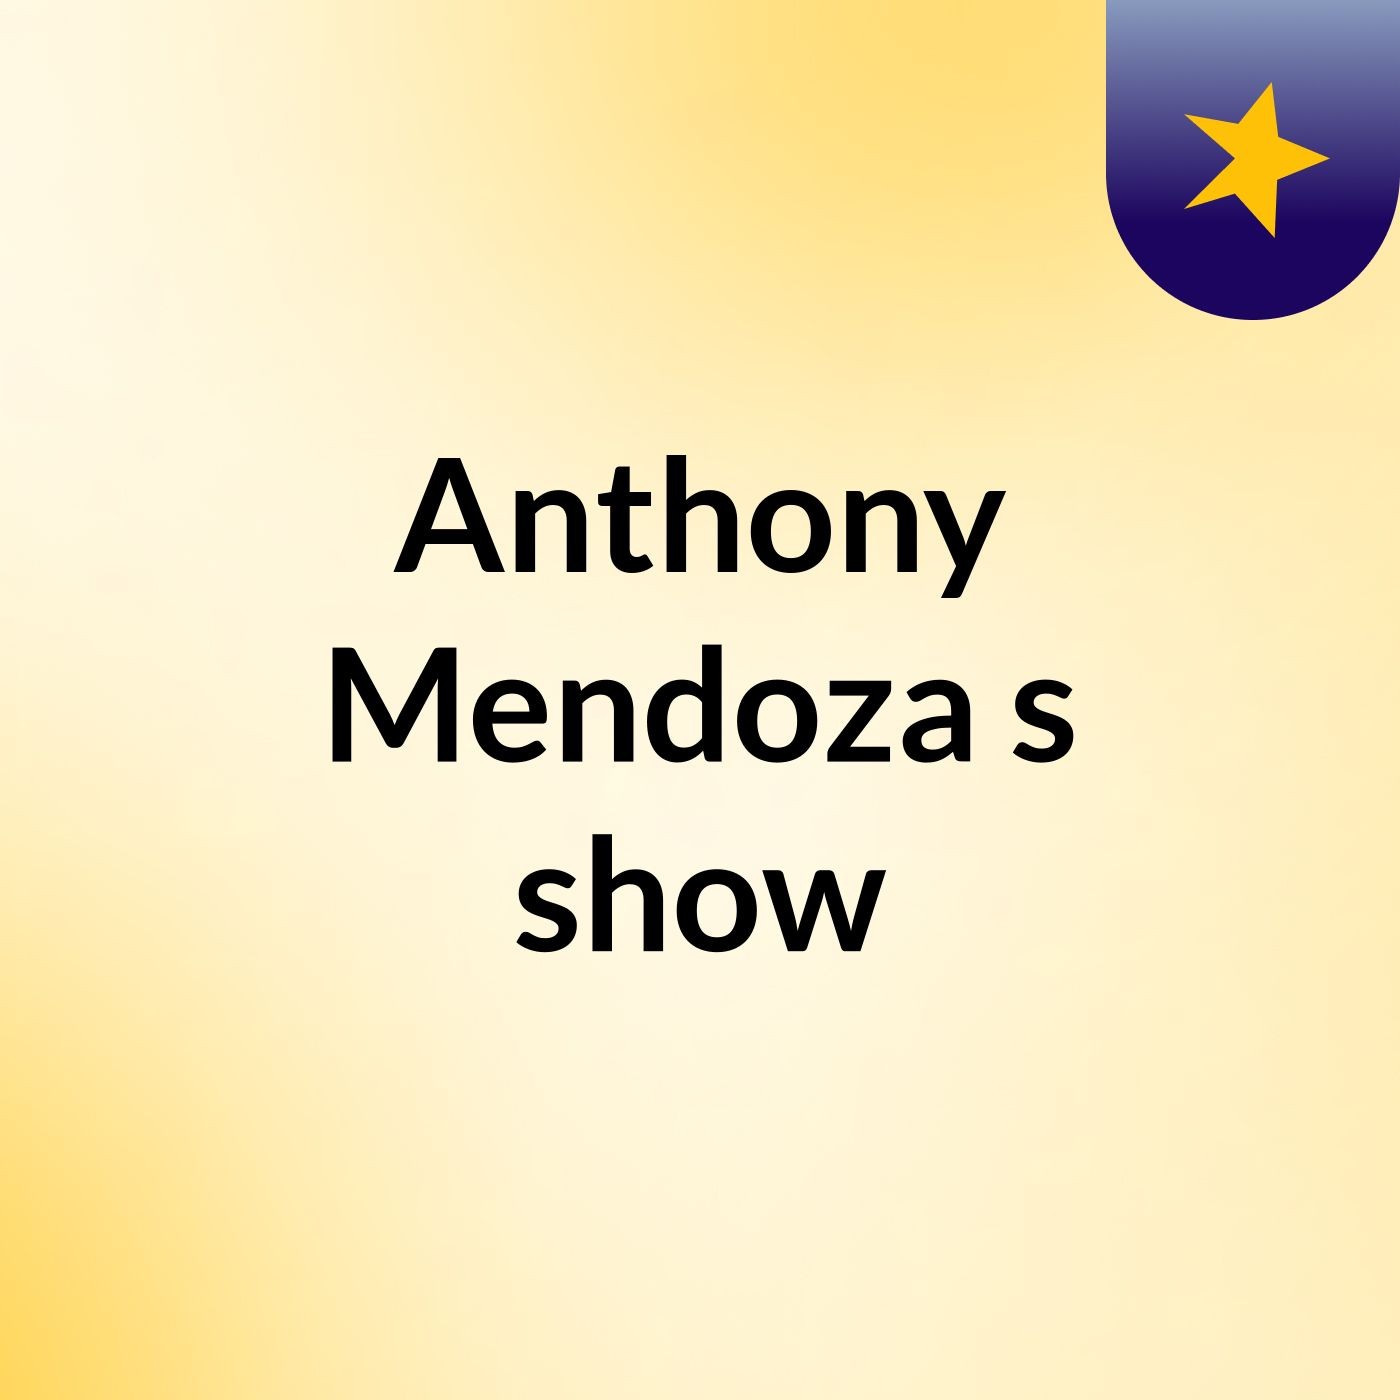 Anthony Mendoza's show